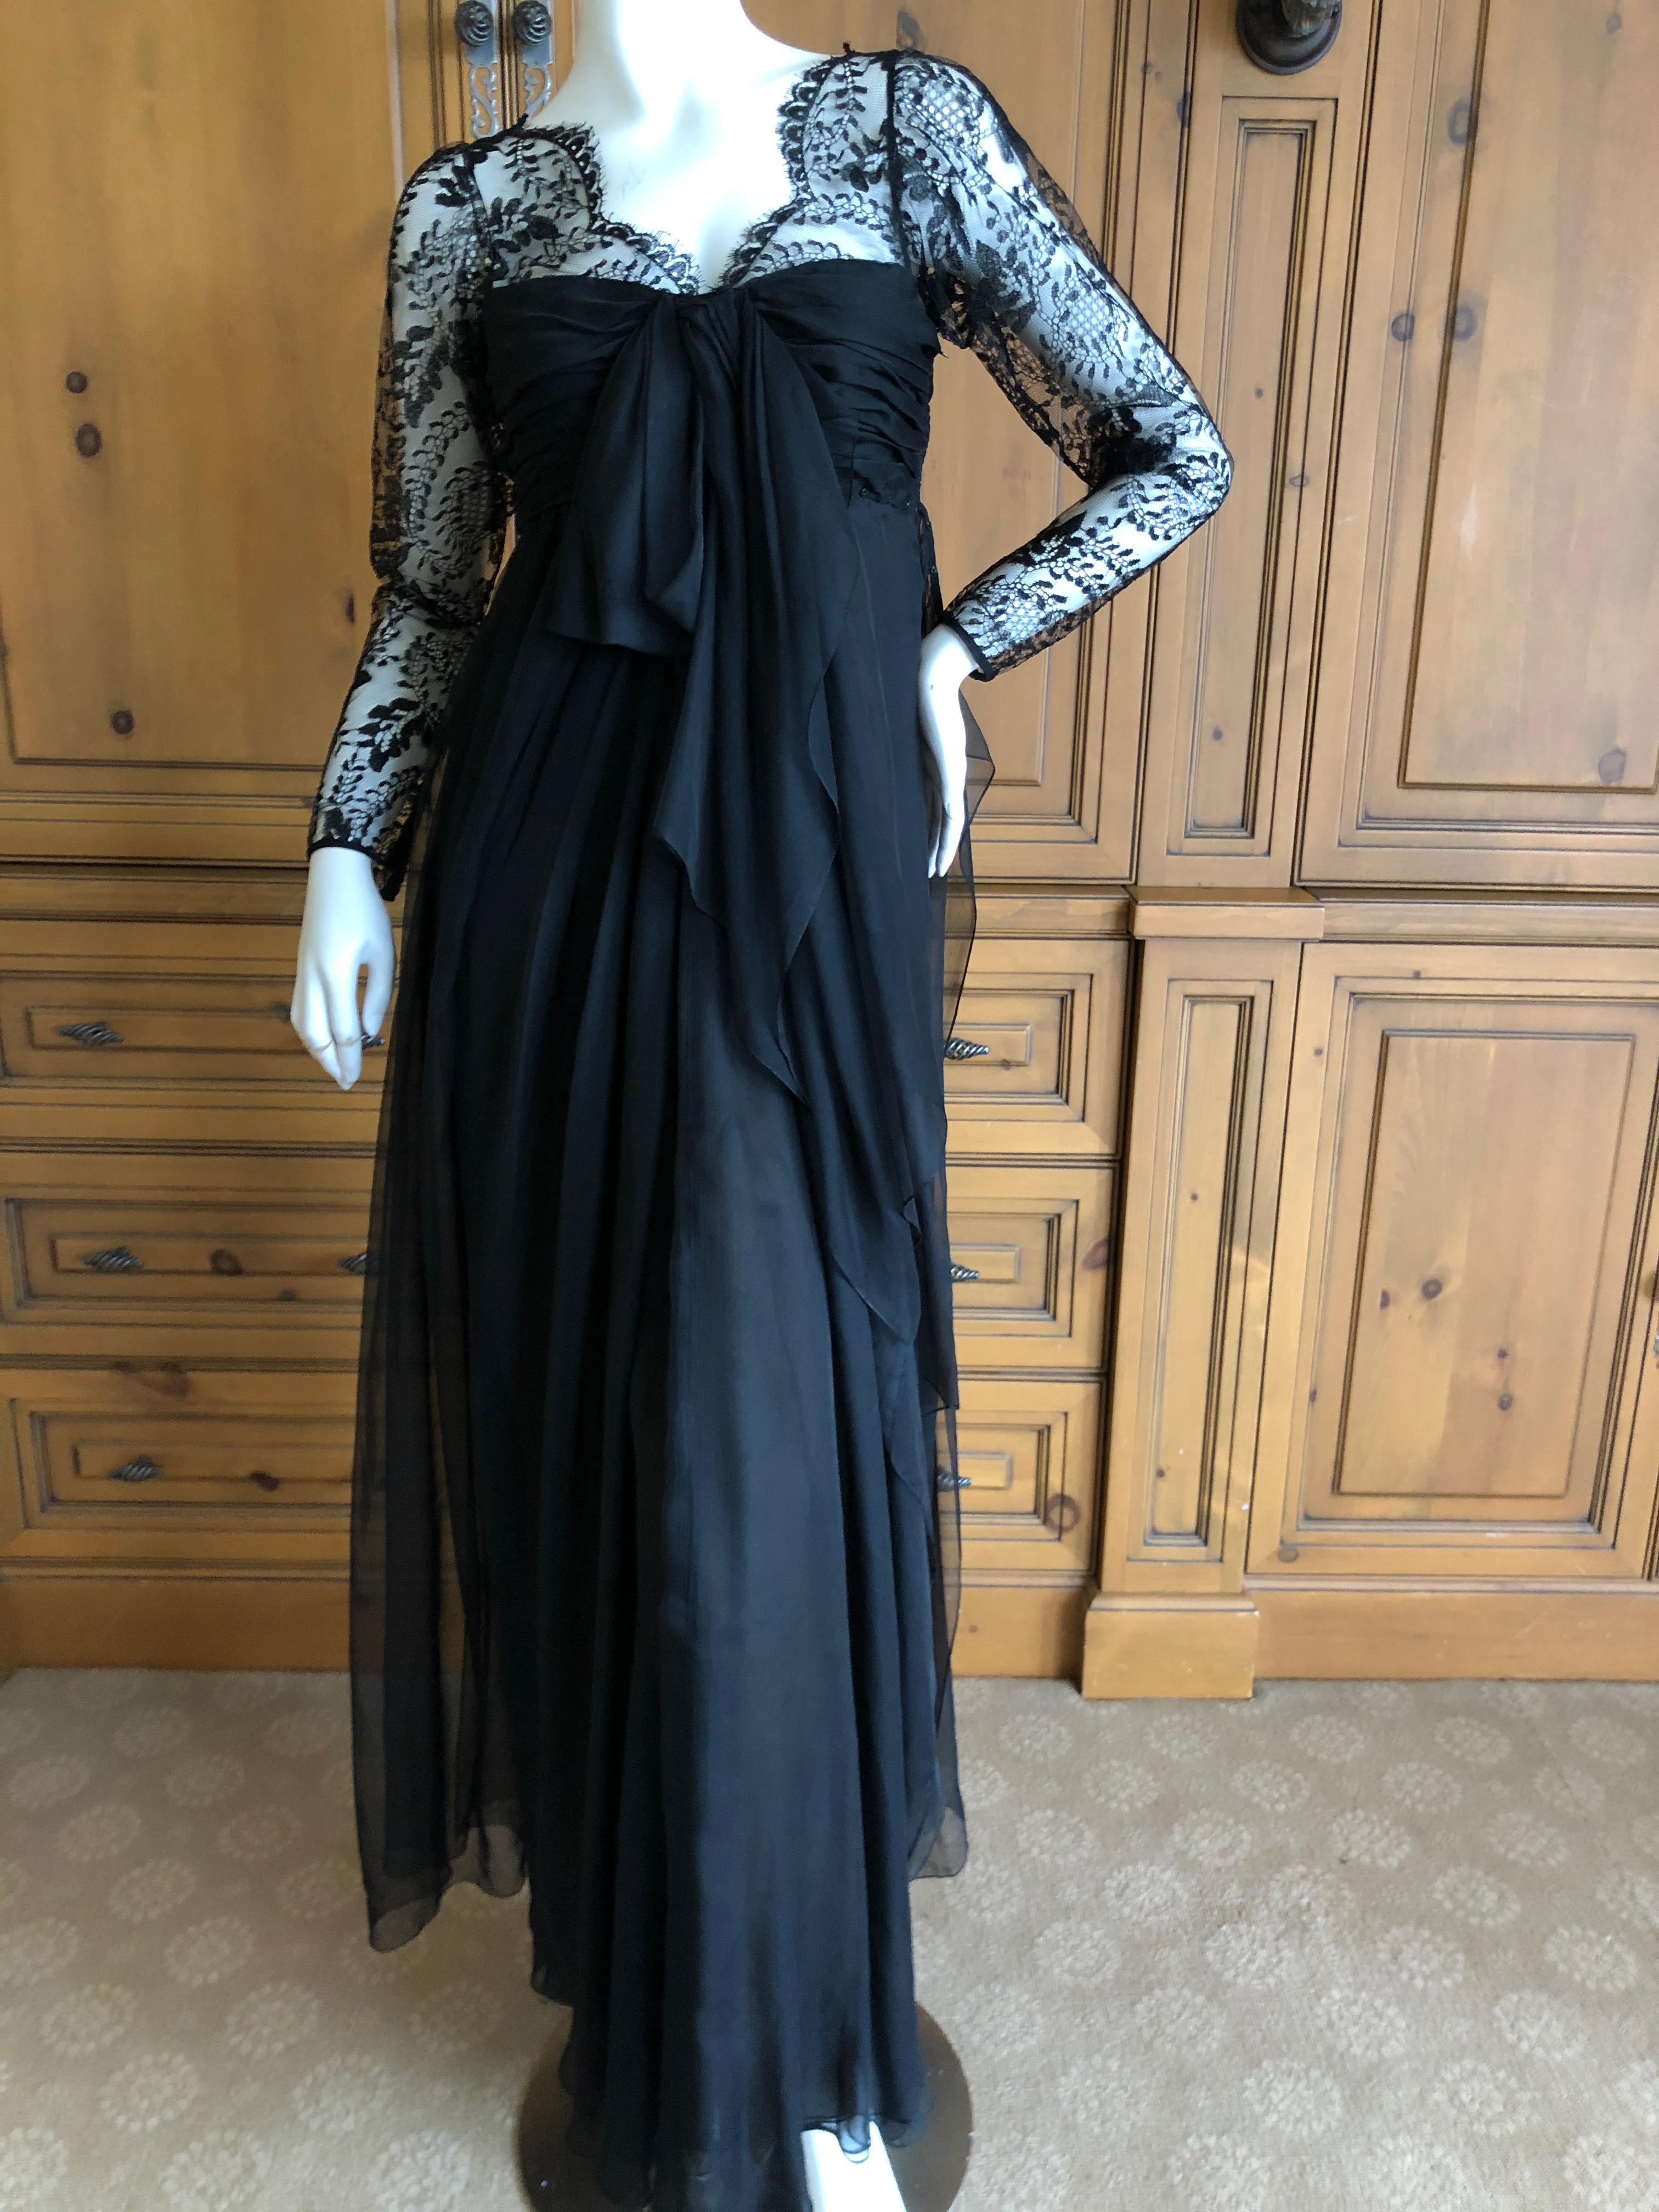 Yves Saint Laurent Numbered Haute Couture 1970's Black Lace Flou Evening Dress For Sale 1